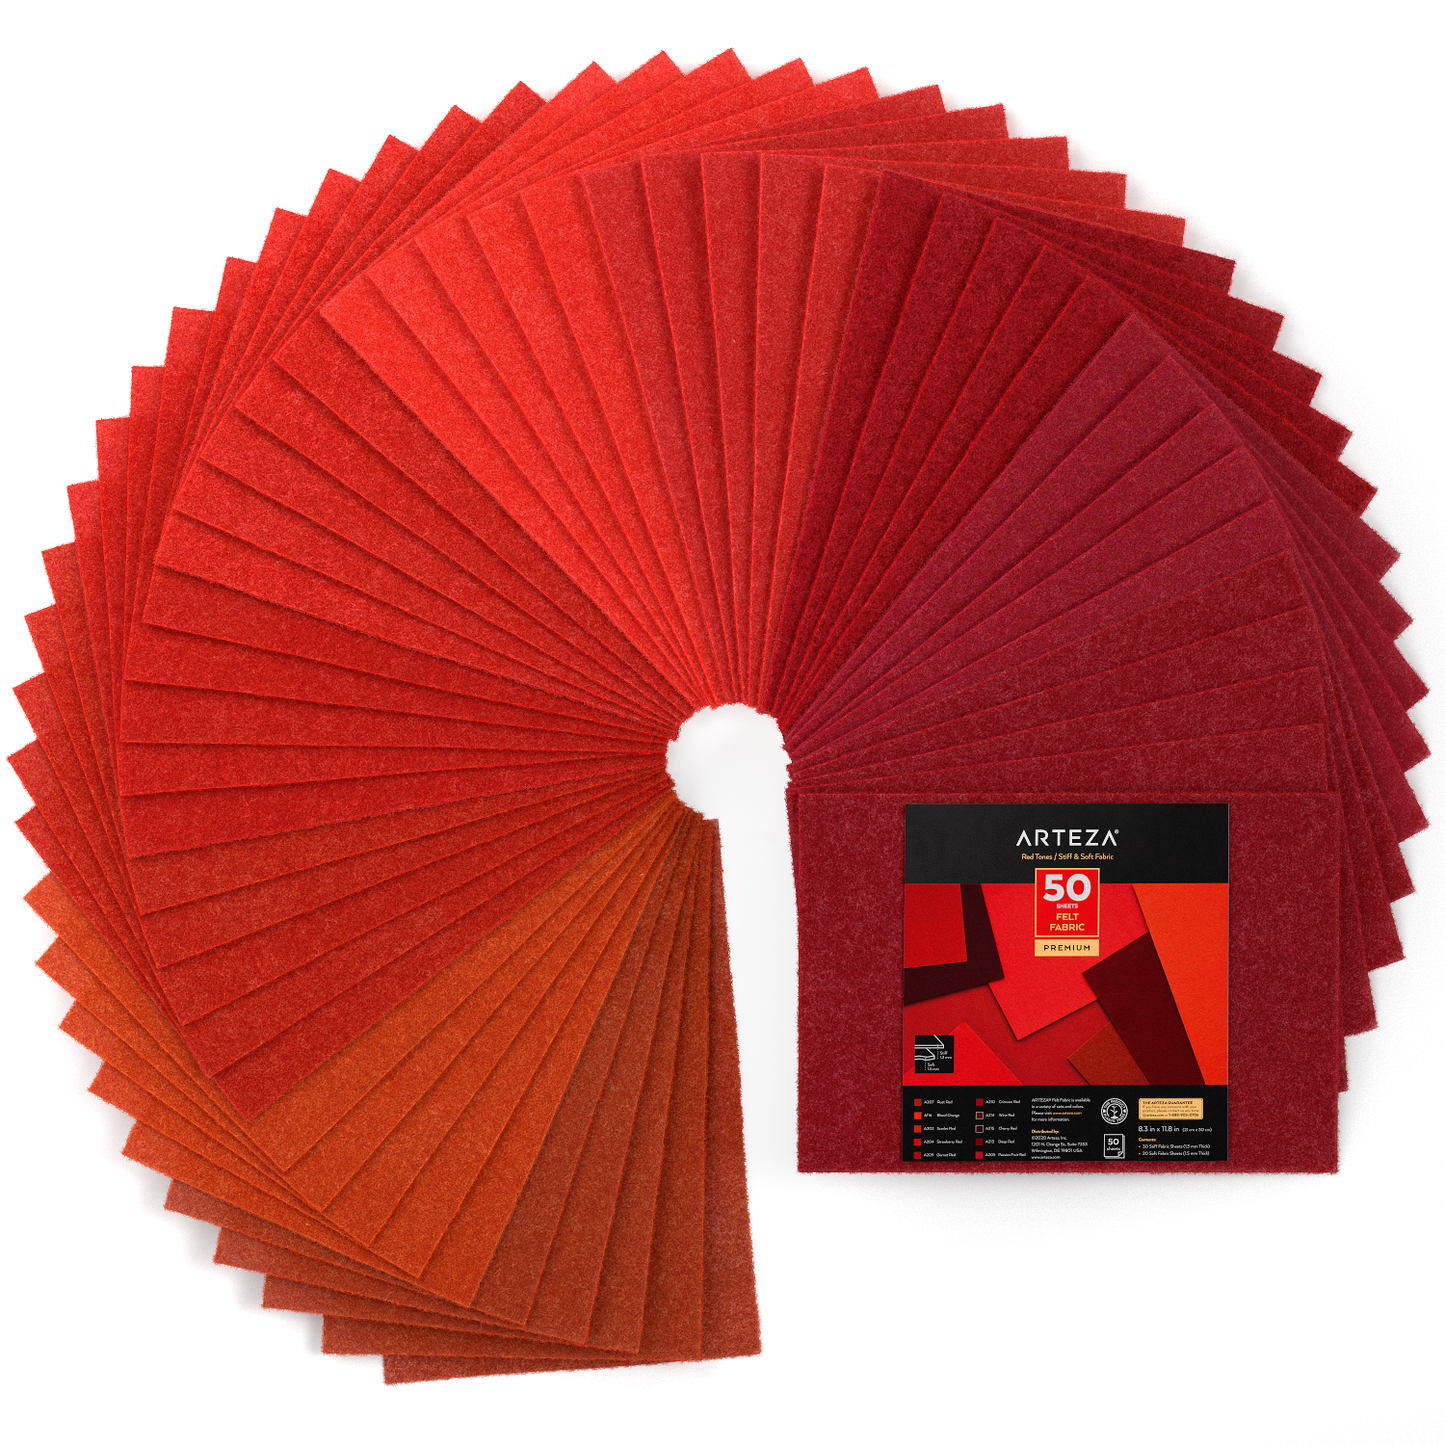 Stiff & Soft Felt Fabric, Red Tones - Set of 50 Sheets